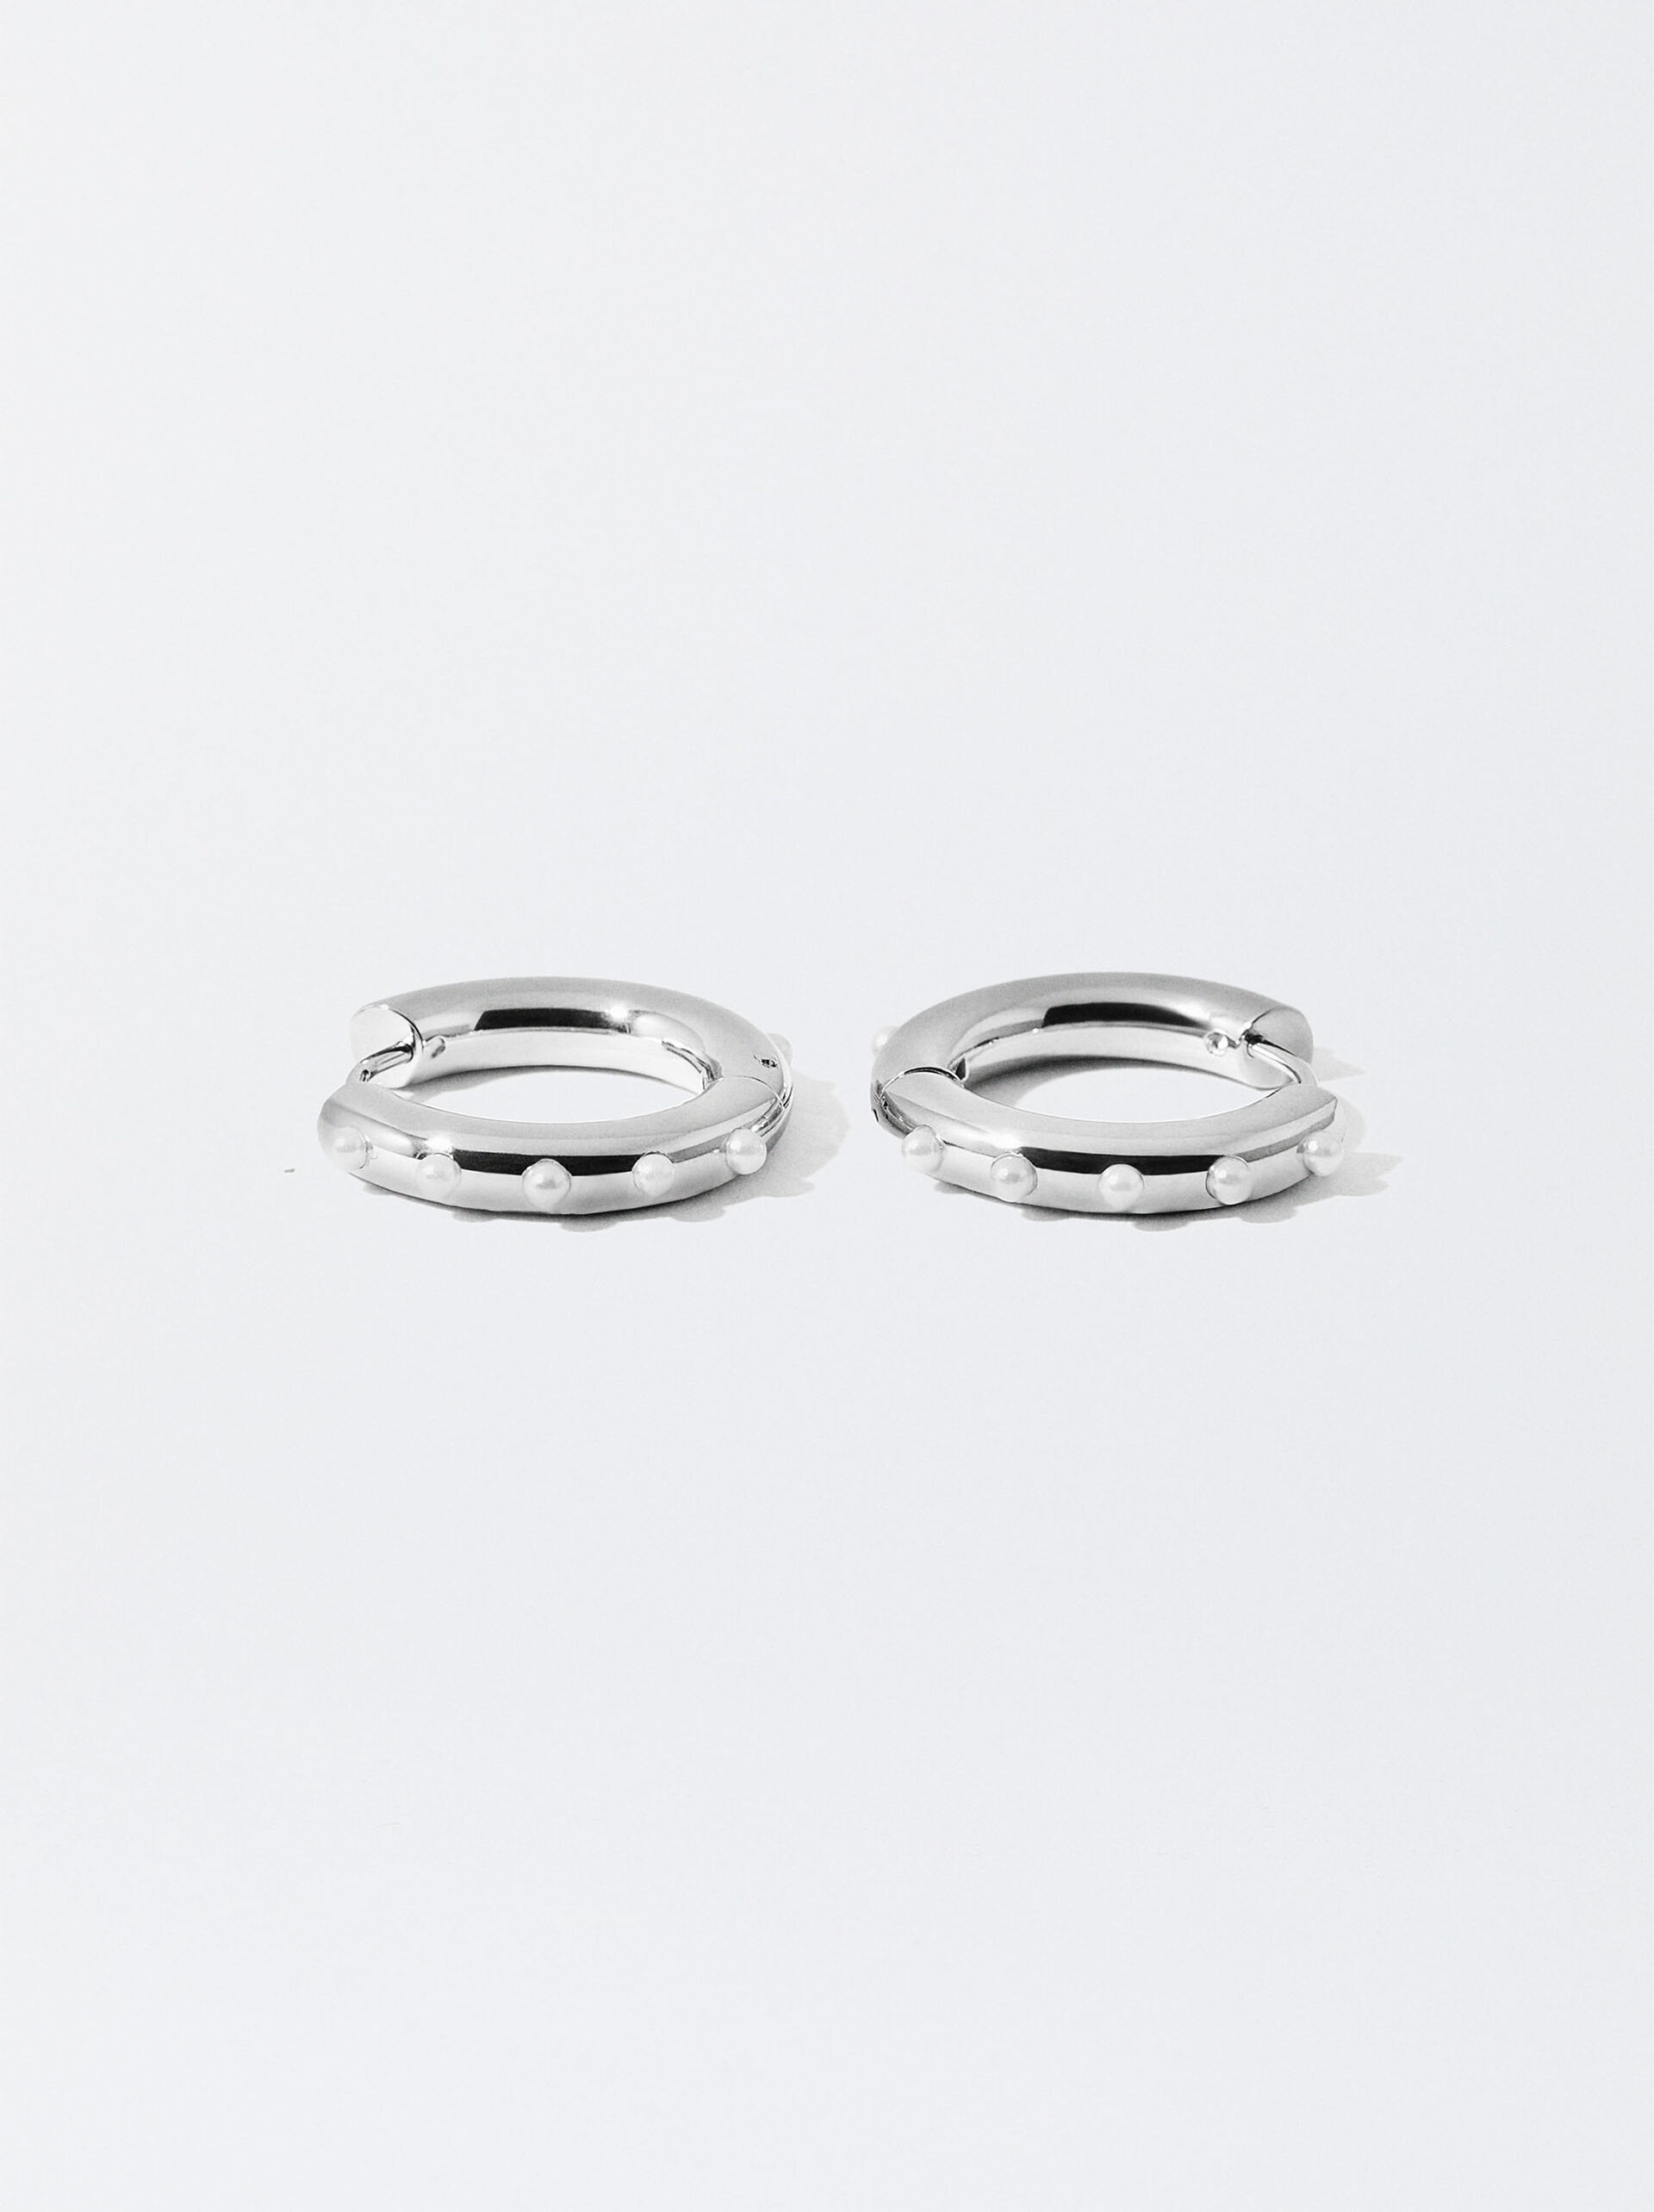 Stainless Steel Hoops Earrings With Pearls image number 2.0